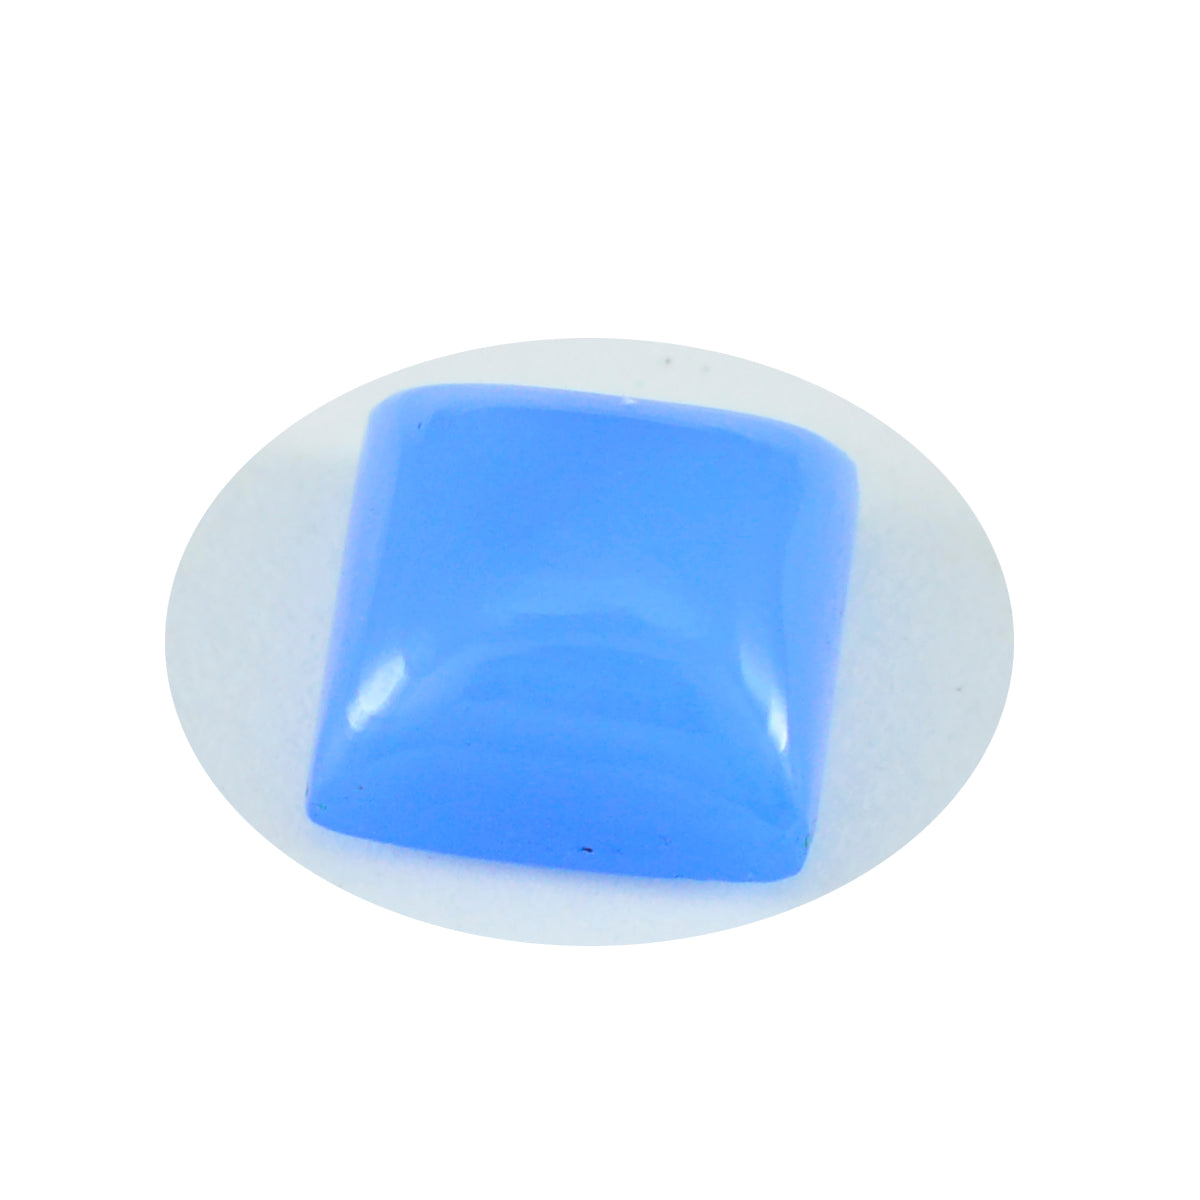 Riyogems 1PC Blue Chalcedony Cabochon 15x15 mm Square Shape wonderful Quality Gems